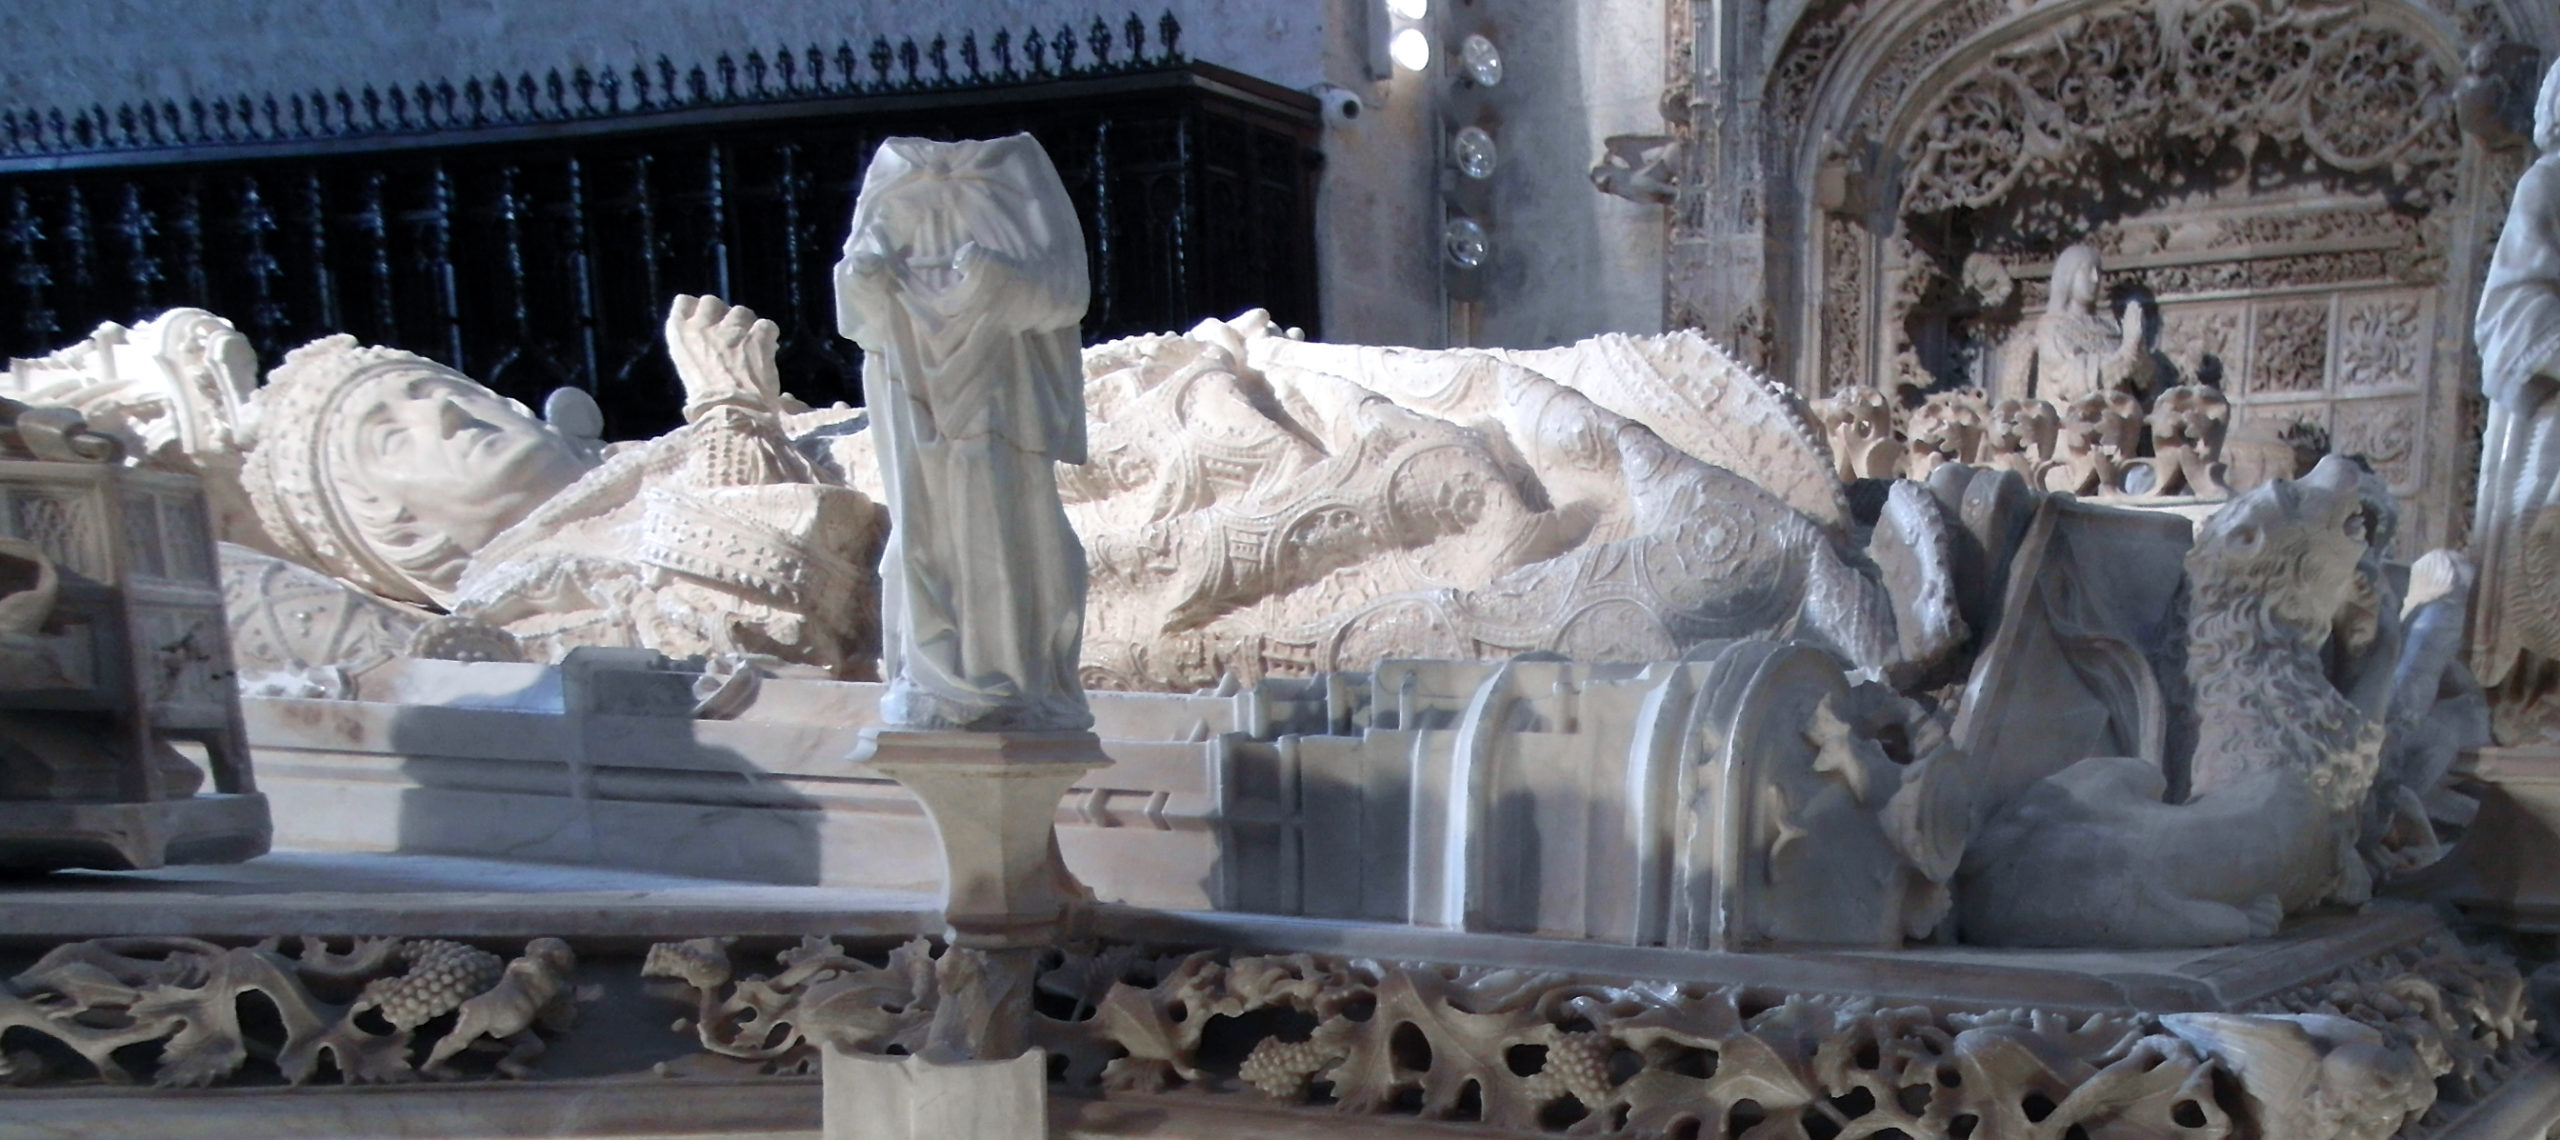 Gil de Siloe, The Tomb of Juan II of Castile and Isabel of Portugal, detail of Juan II of Castile, 1489-93, alabaster (photo: Rowanwindwhistler, CC BY-SA 3.0)